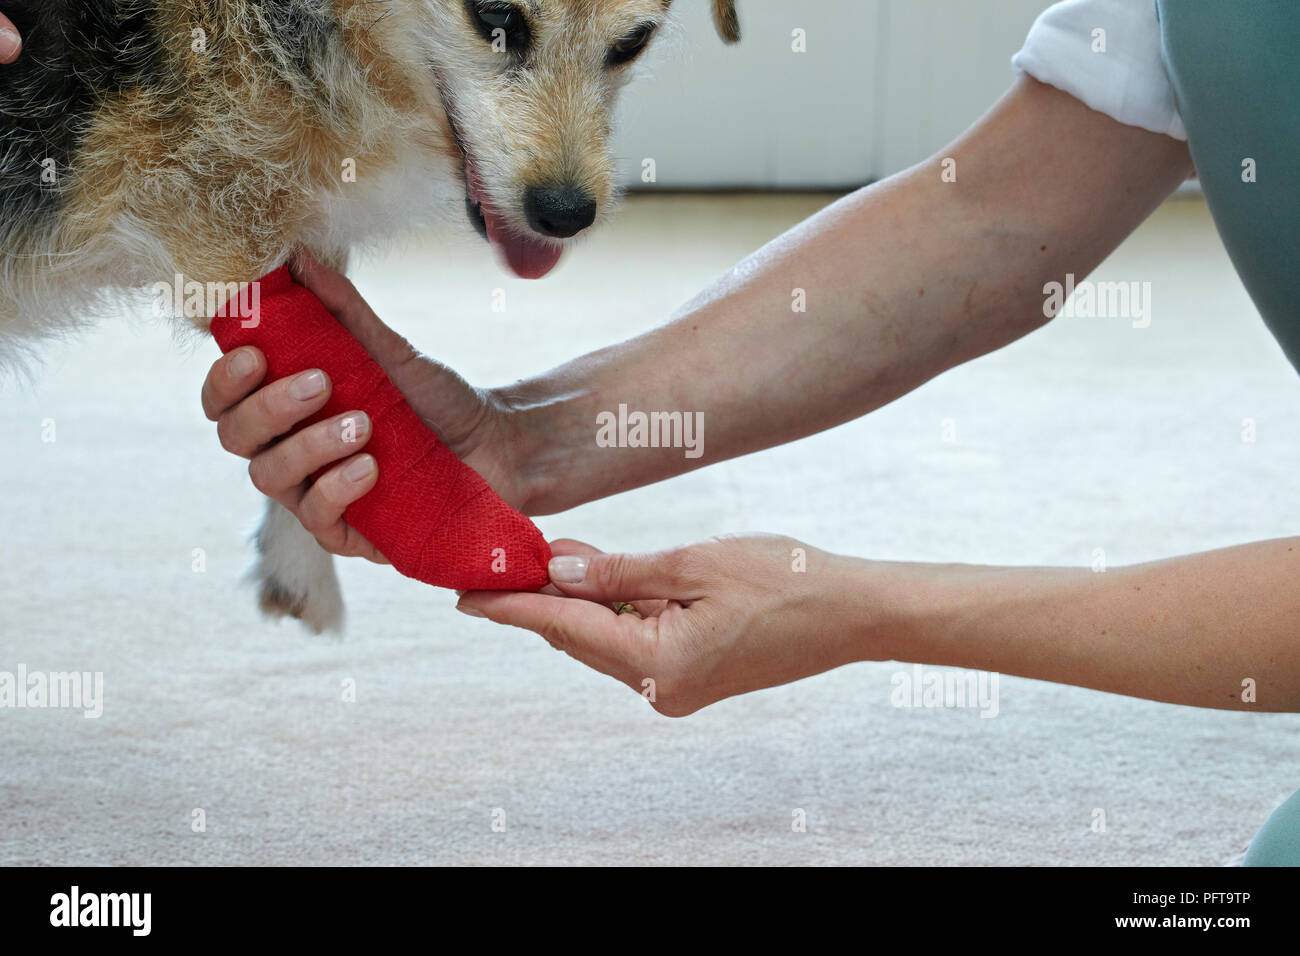 Applying bandage to Jack Russell paw using cohesive tape Stock Photo